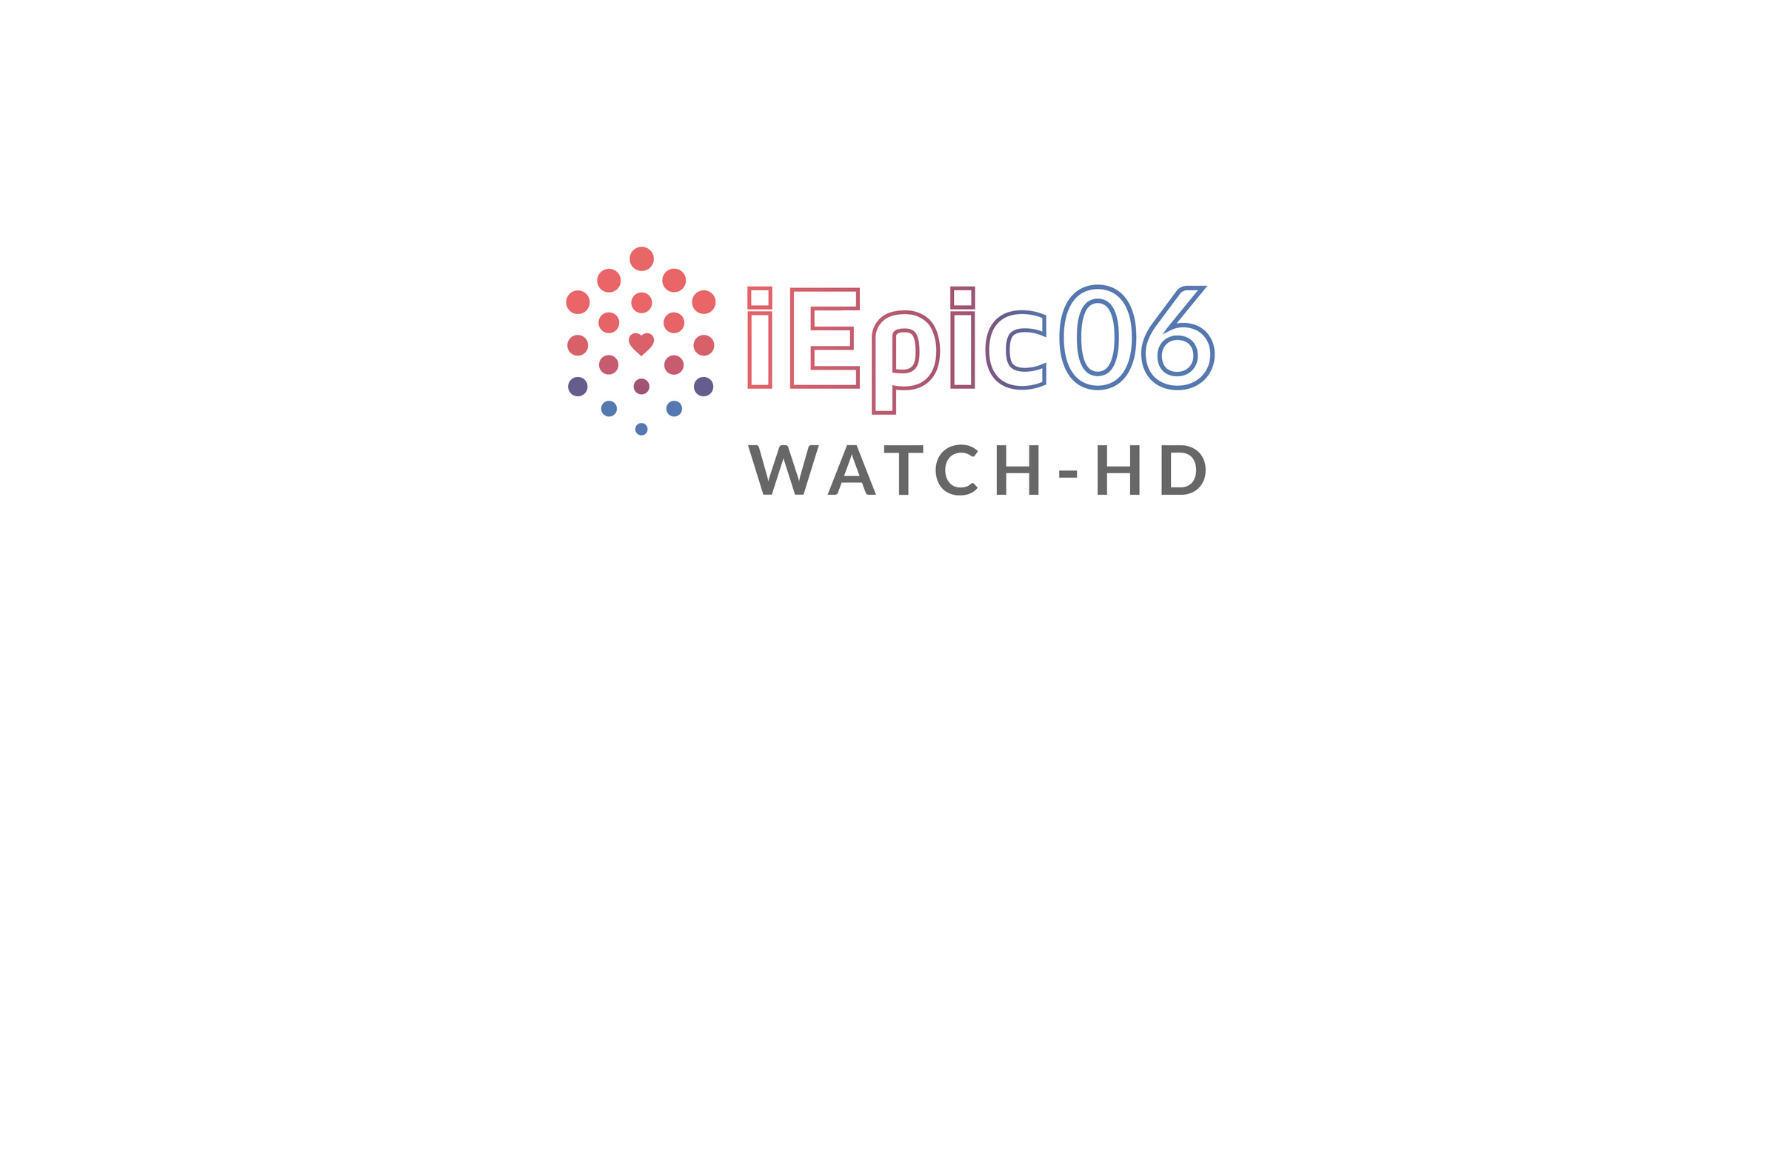 WATCH-HD EPIC06